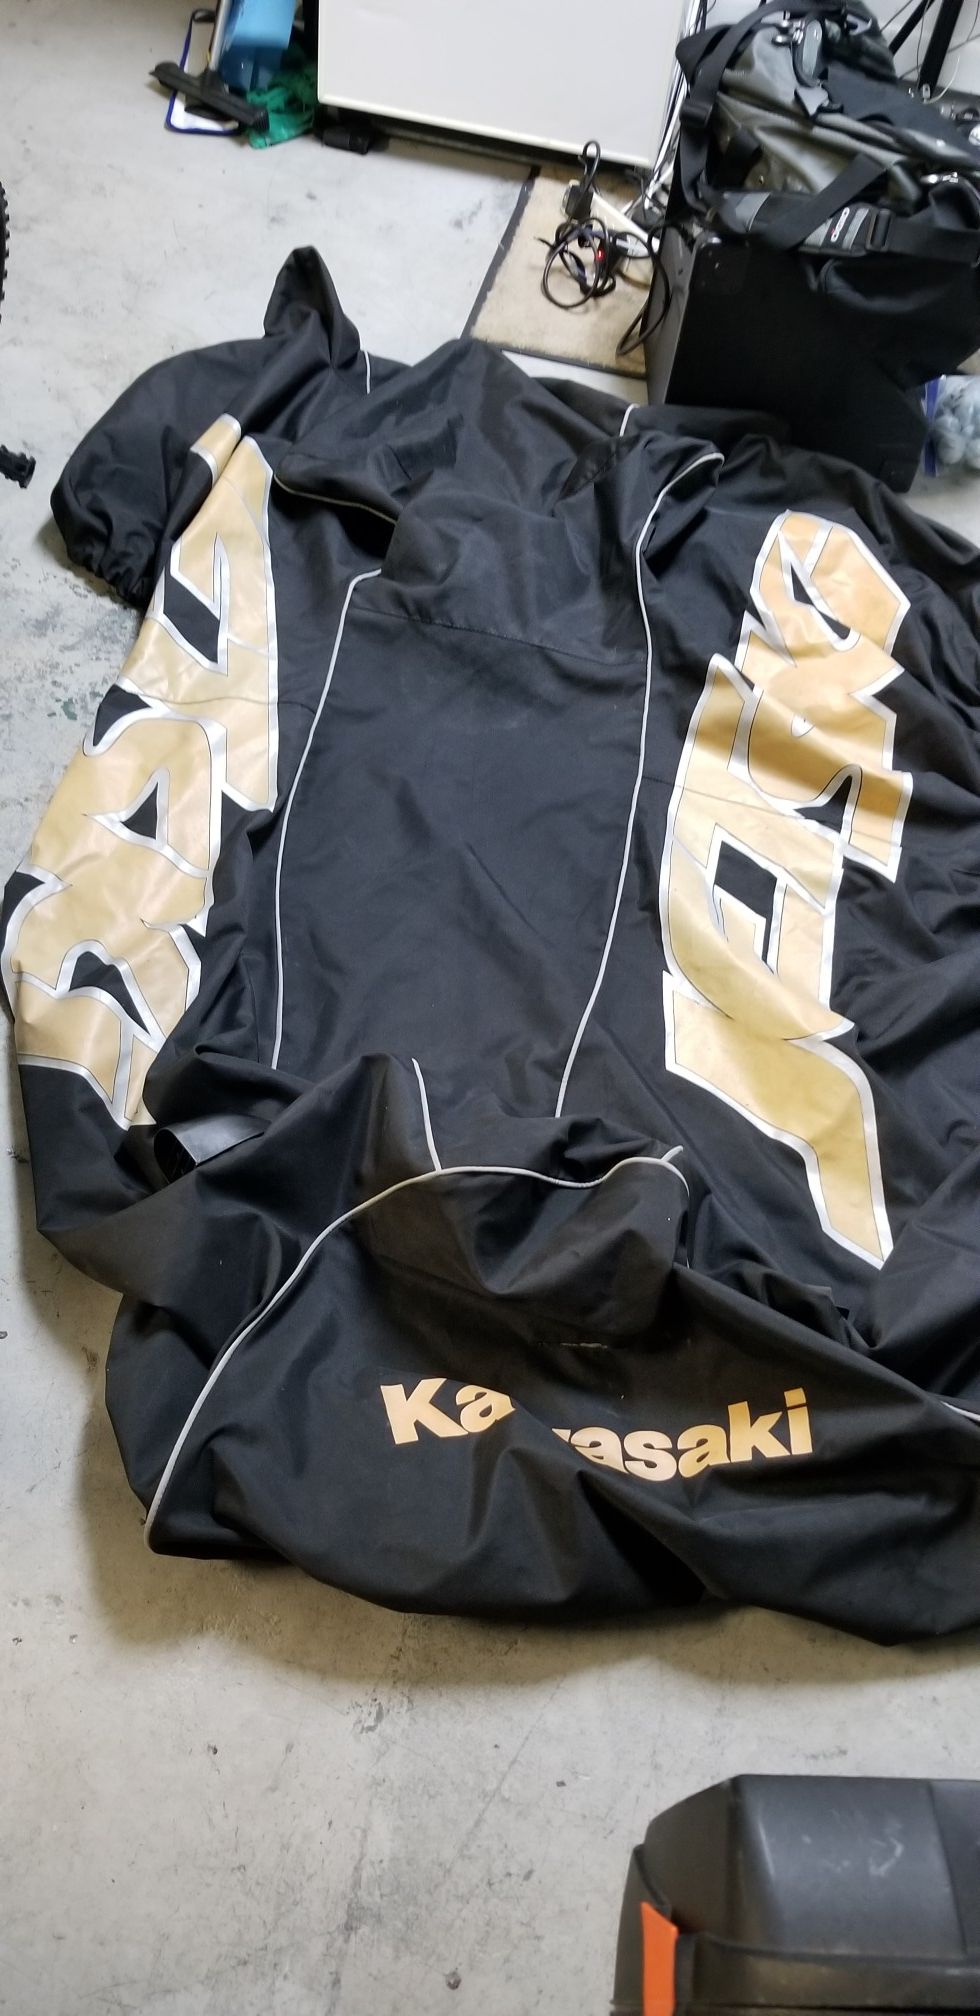 Kawasaki Jetski cover